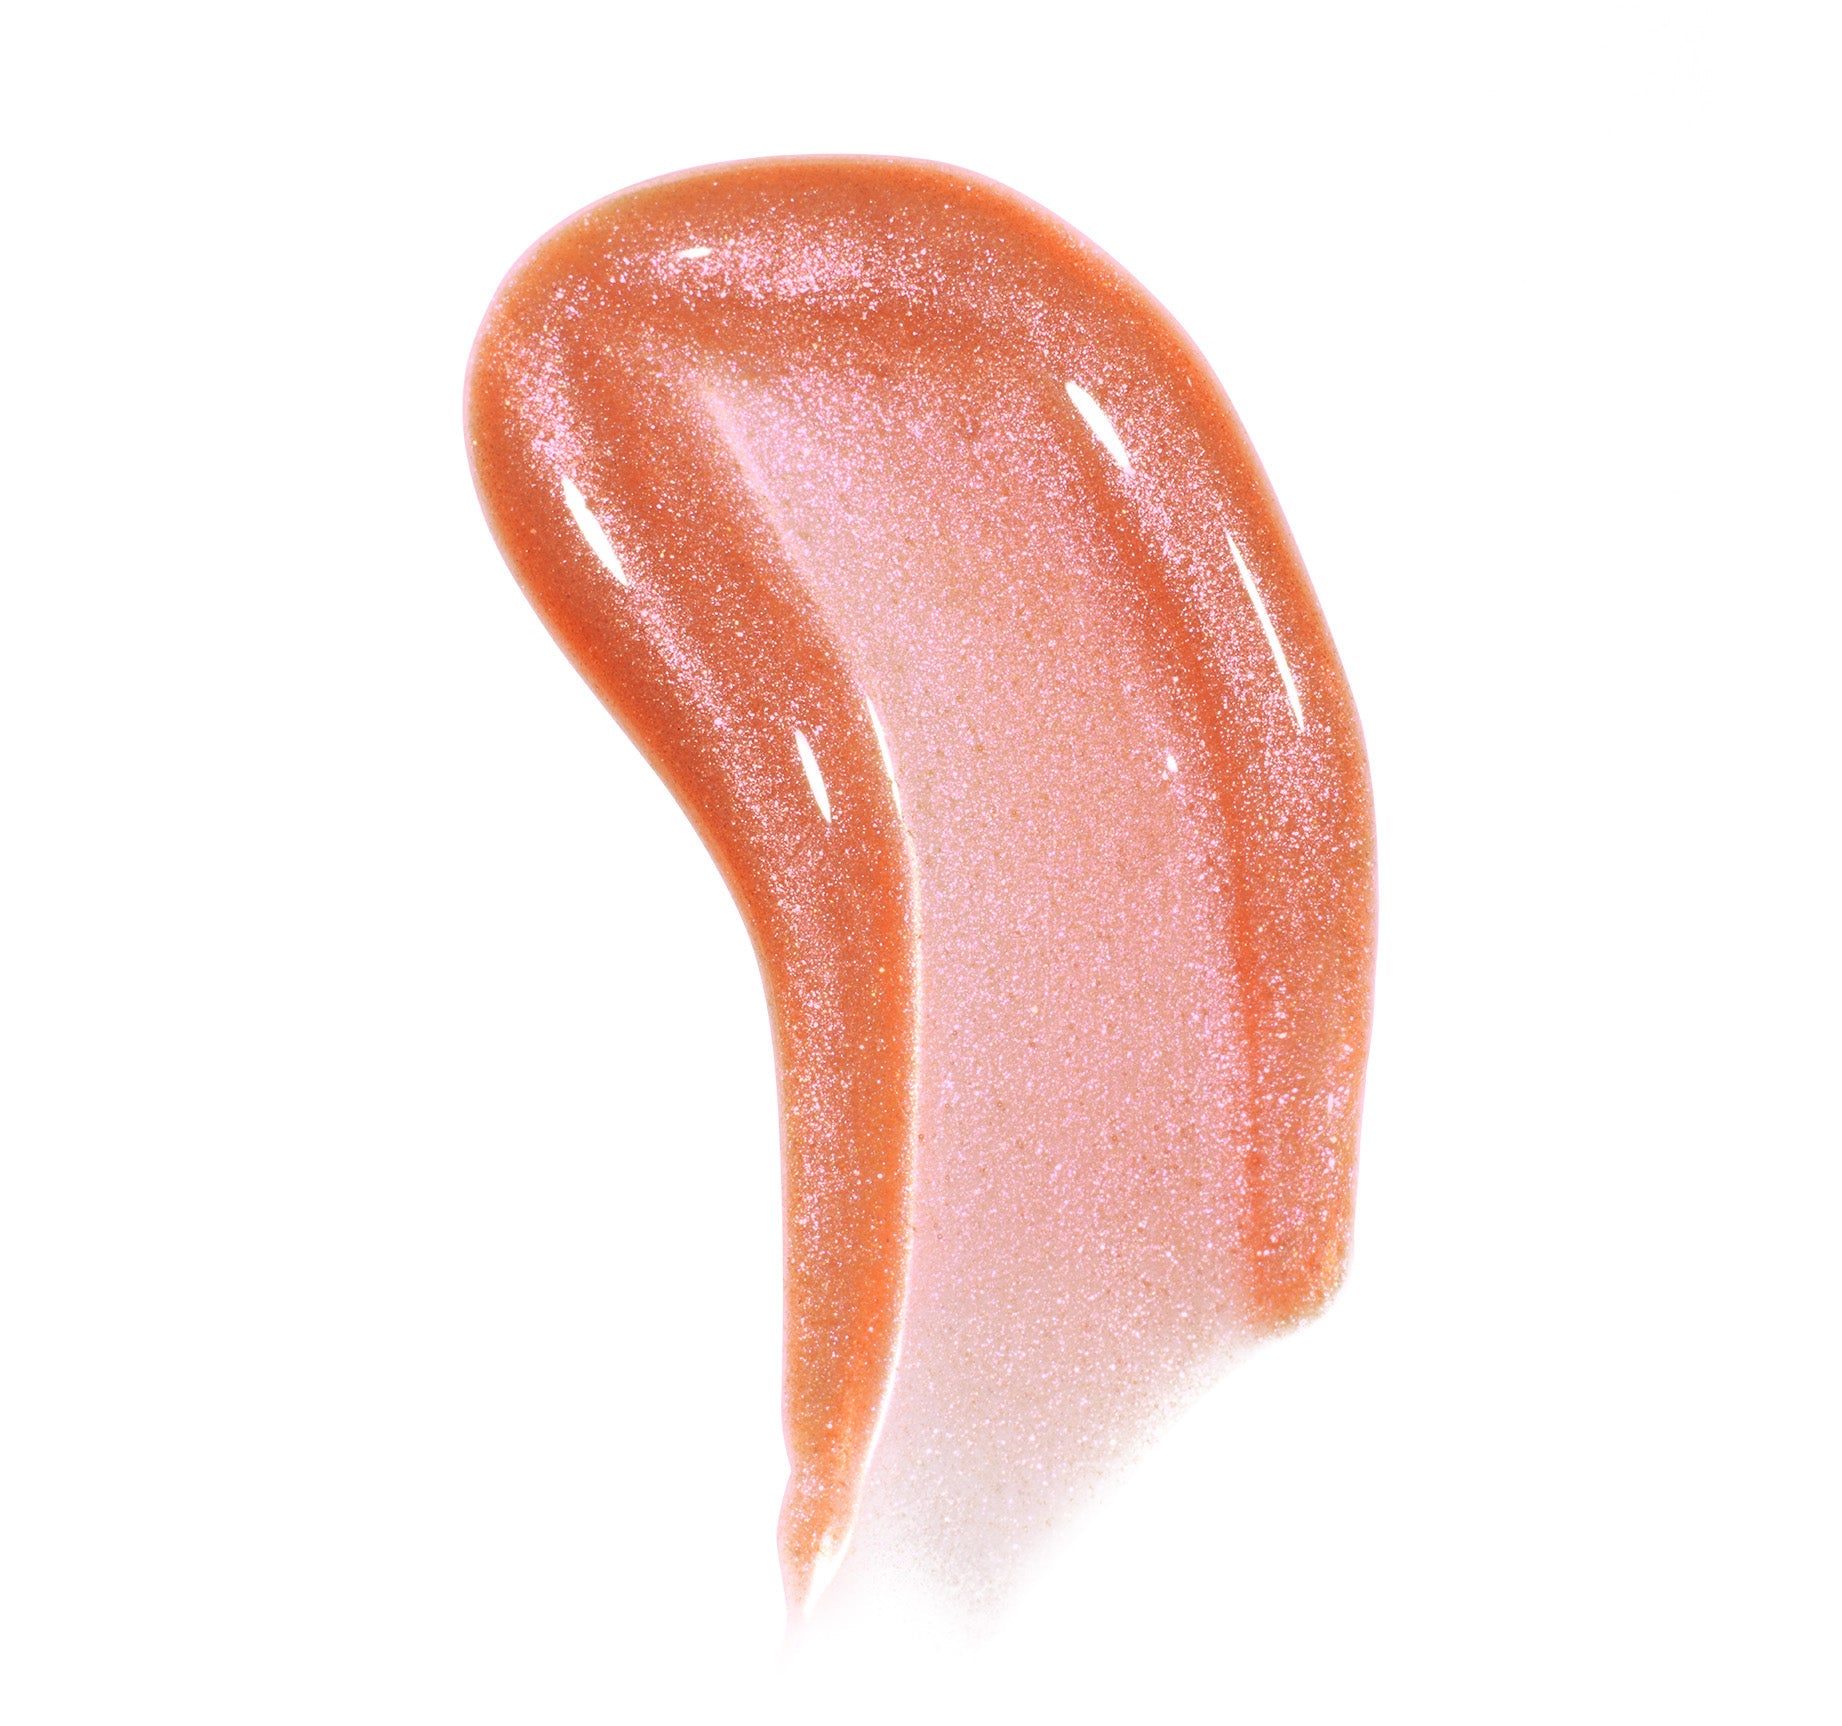 Dripglass Glazed High Shine Lip Gloss - Peach Prism - Image 2